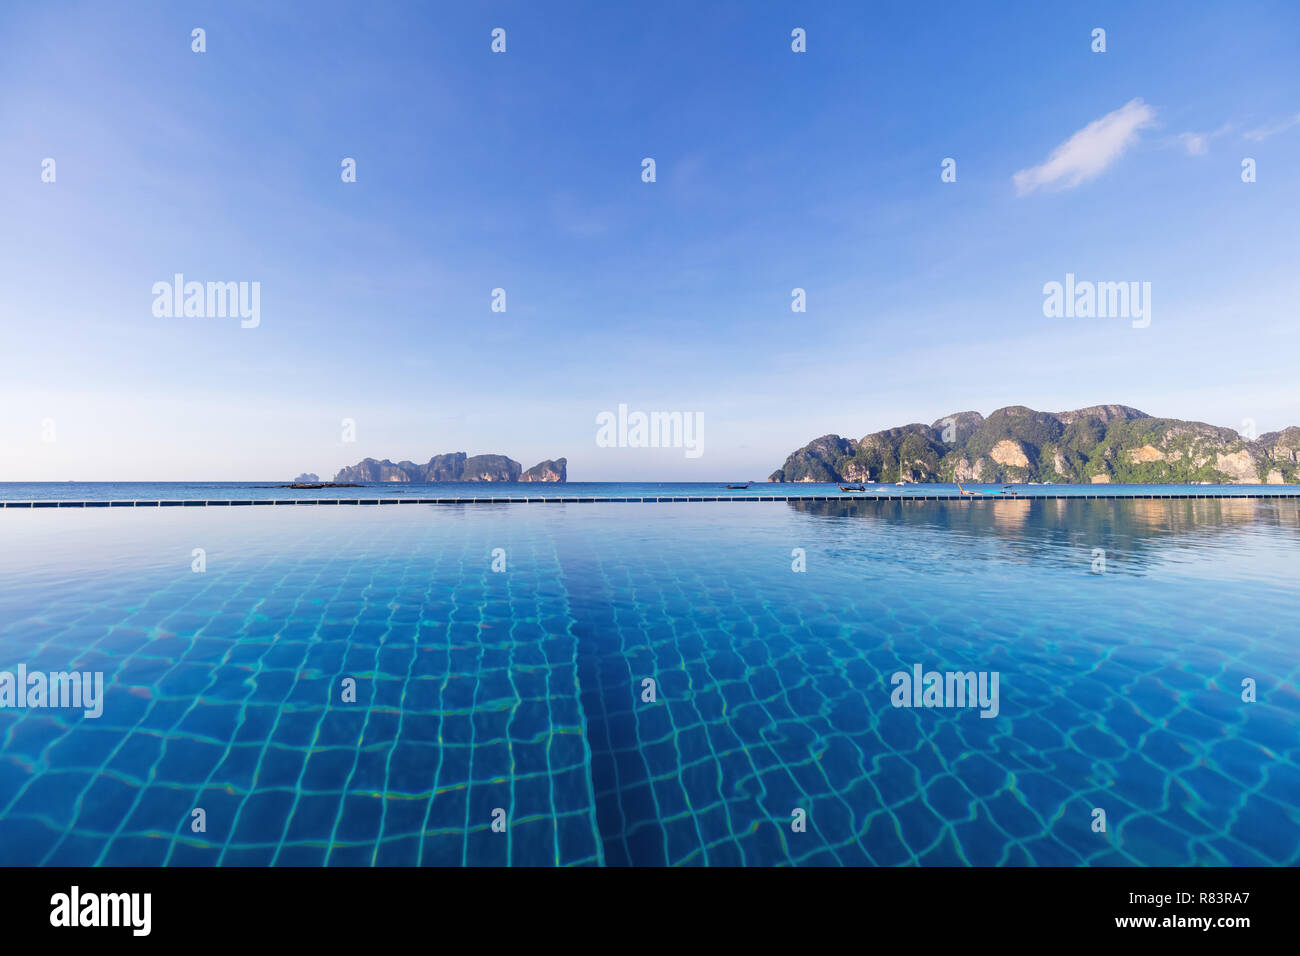 Asian tropical beach paradise in Thailand Stock Photo